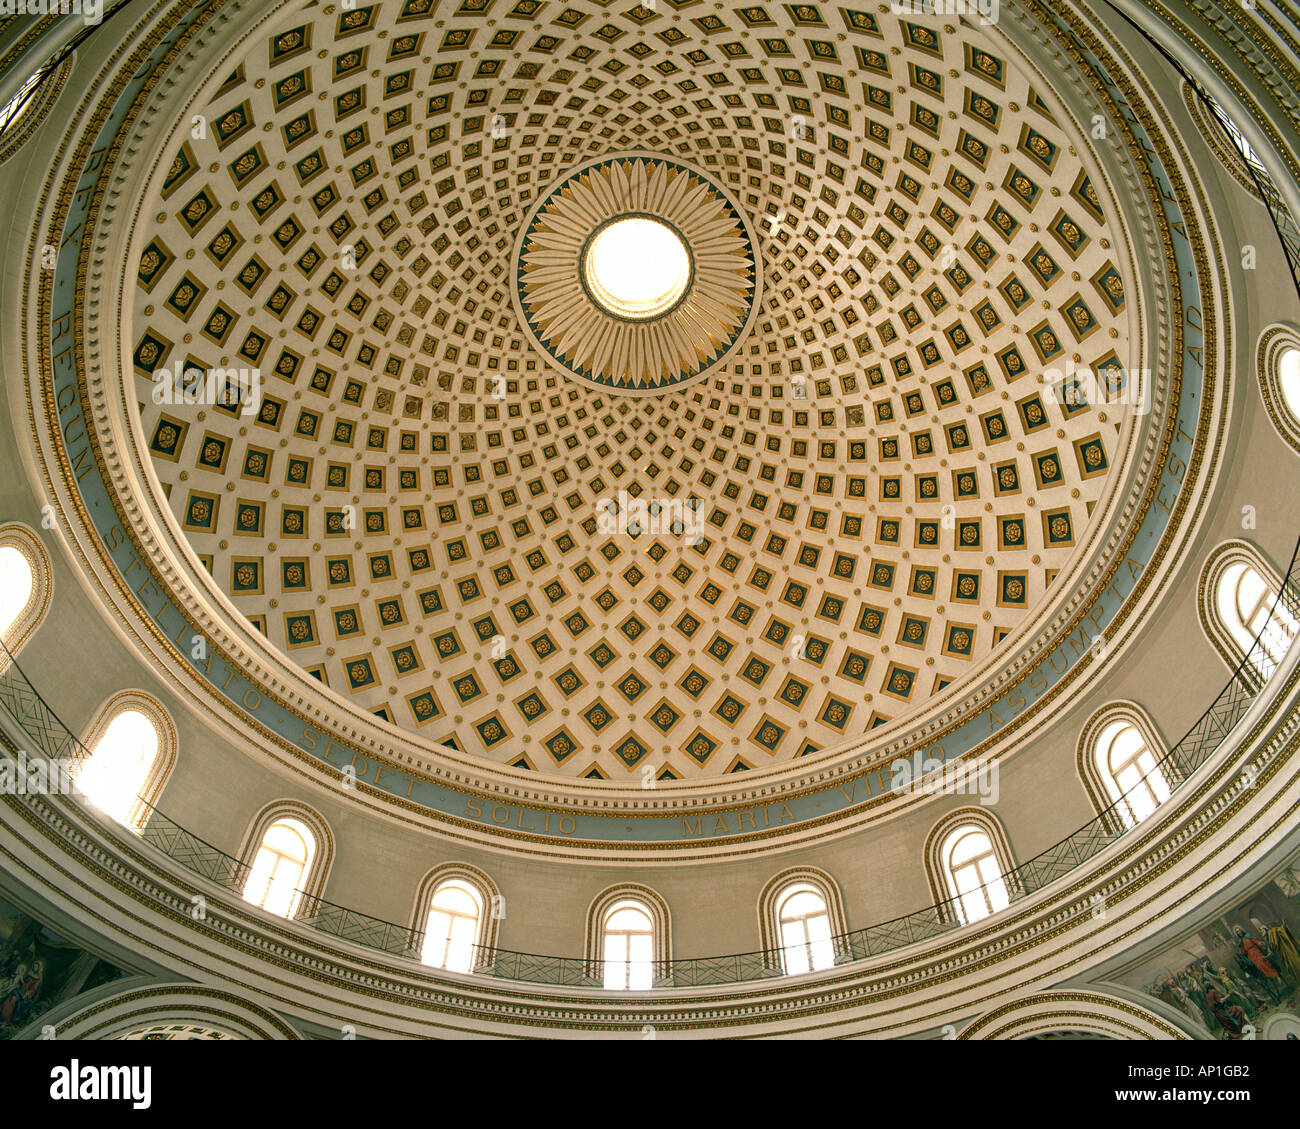 MT - MOSTA: Cathedral Interior Stock Photo